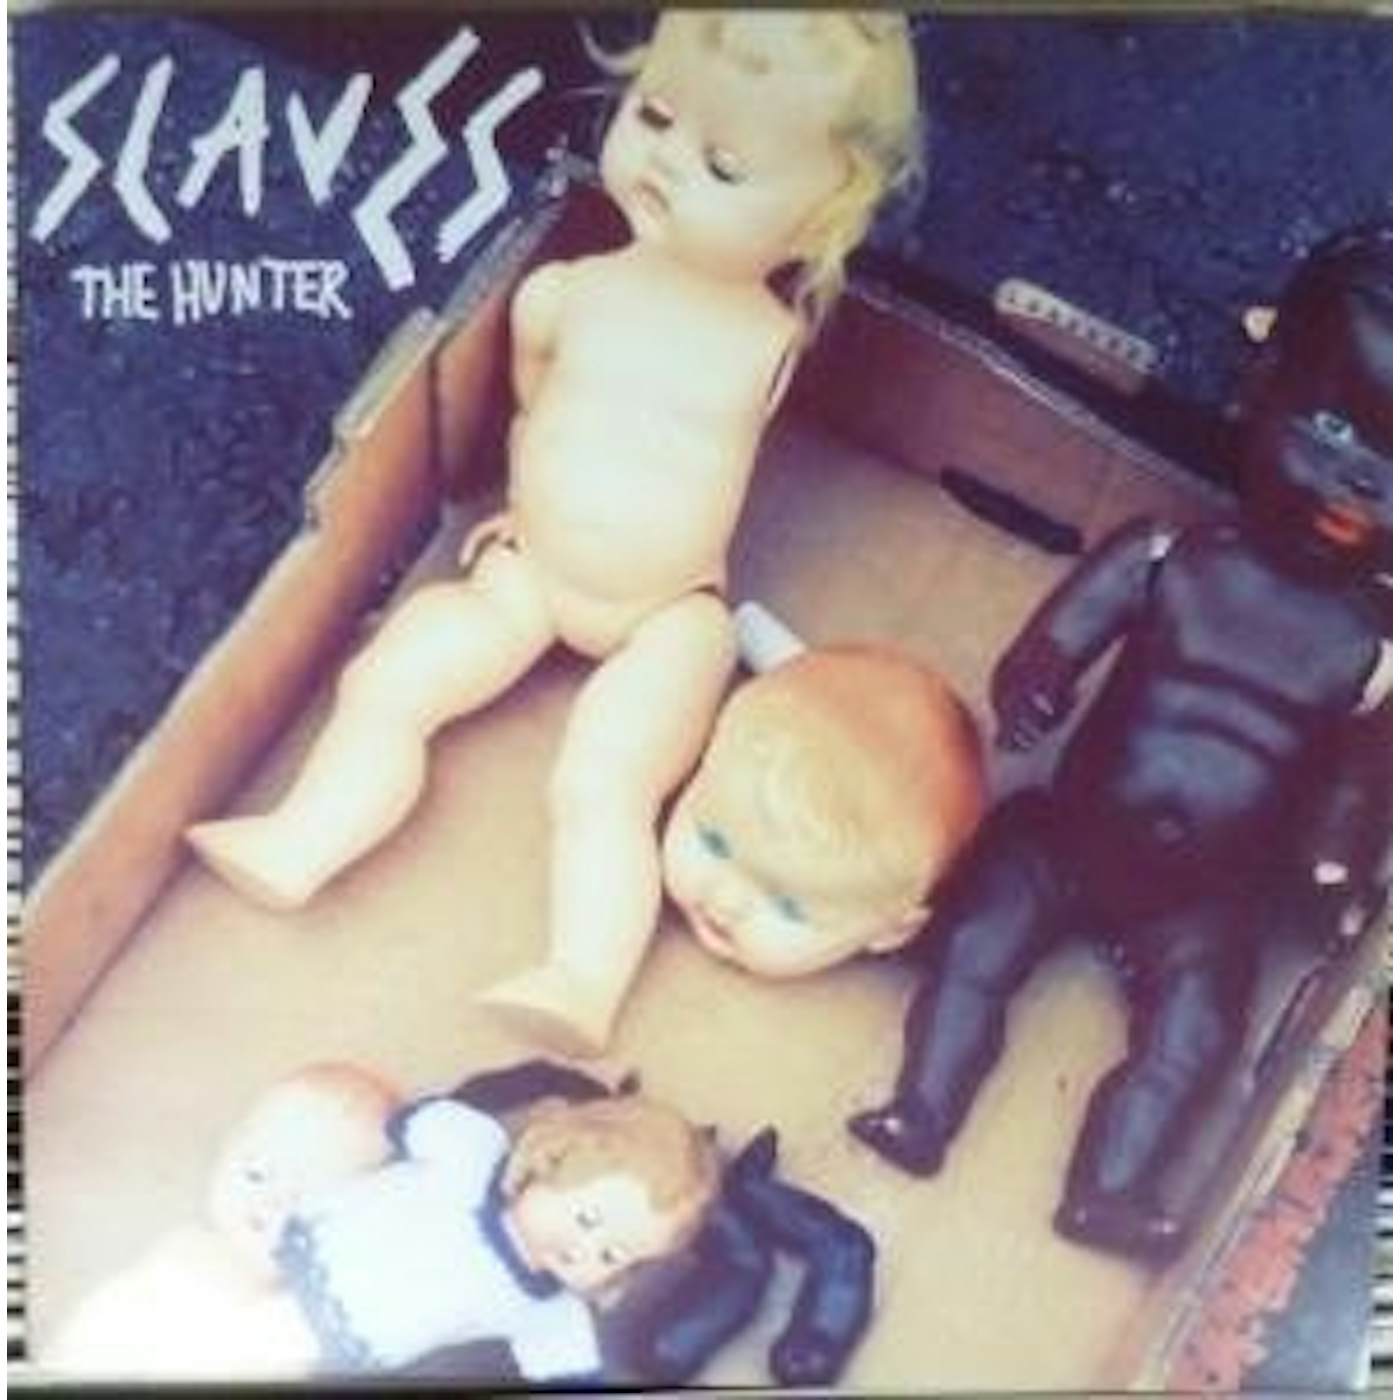 Slaves HUNTER Vinyl Record - UK Release